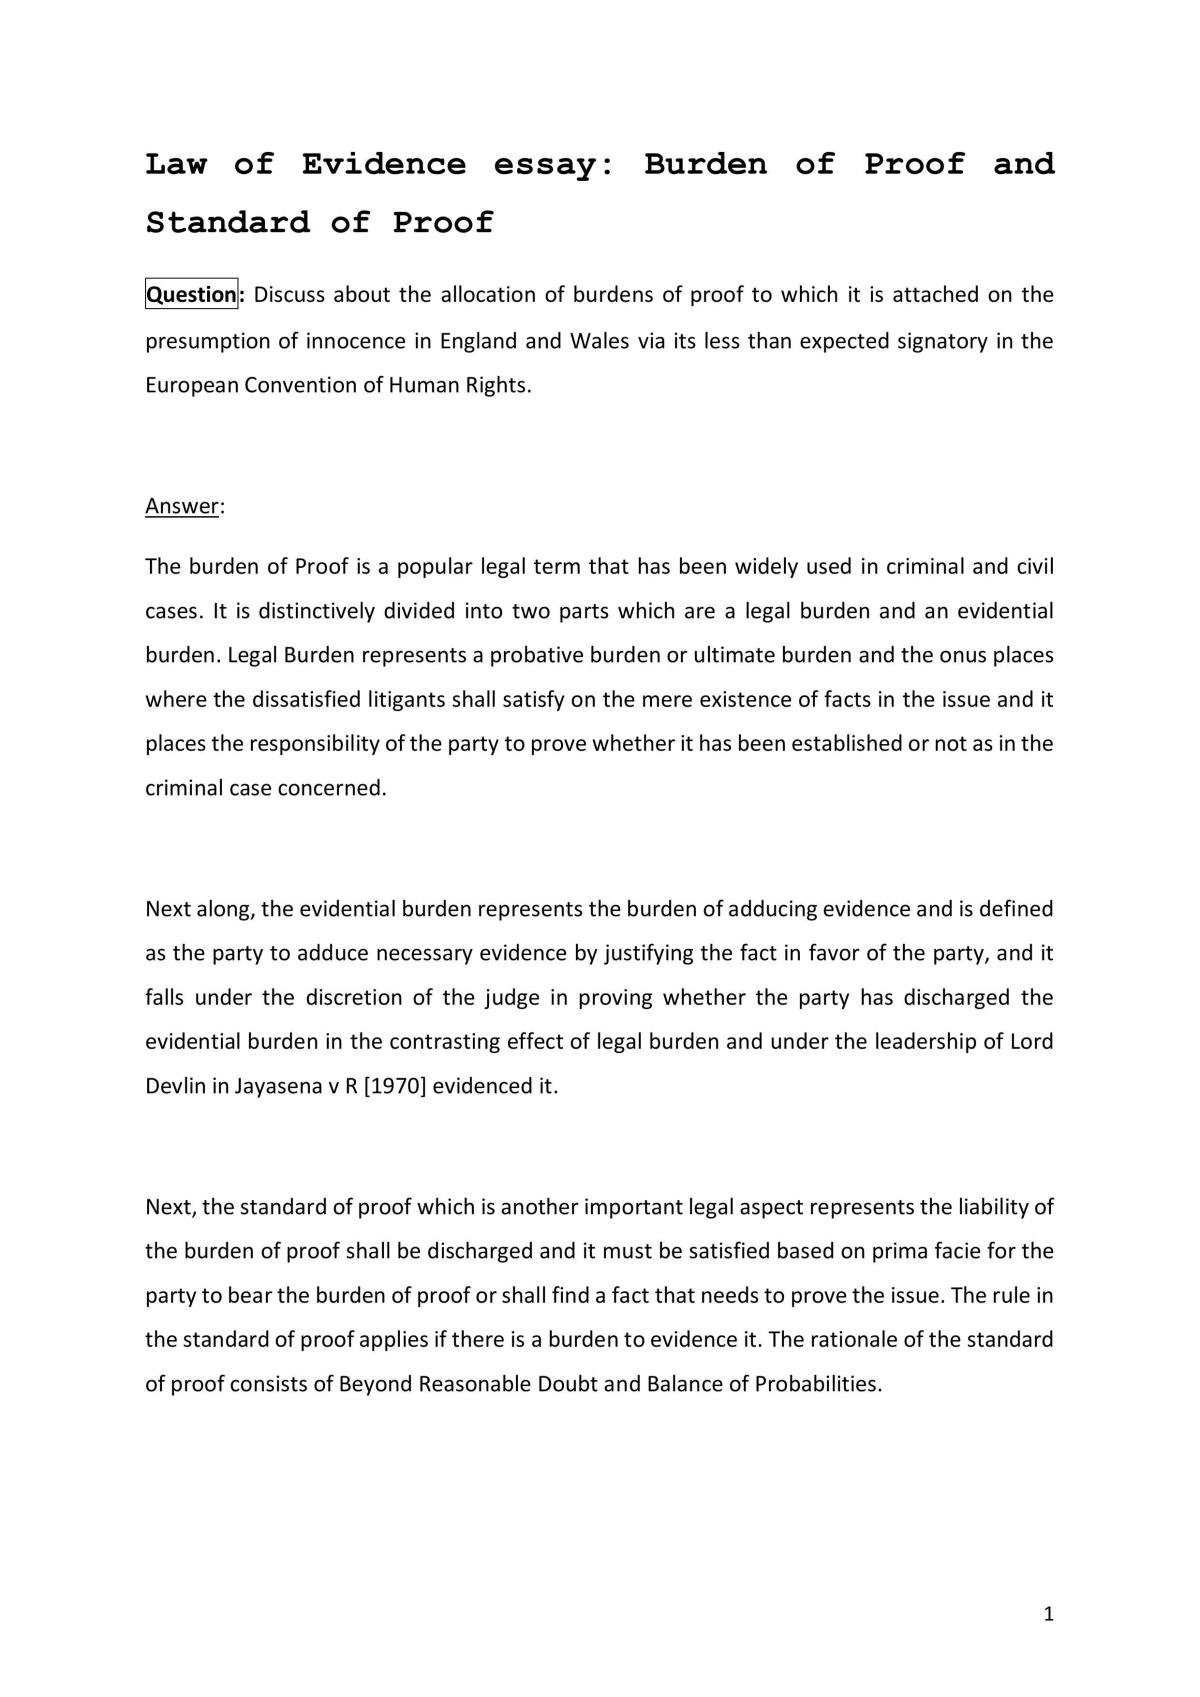 LAW 3216 Burden of Proof essay - Page 1